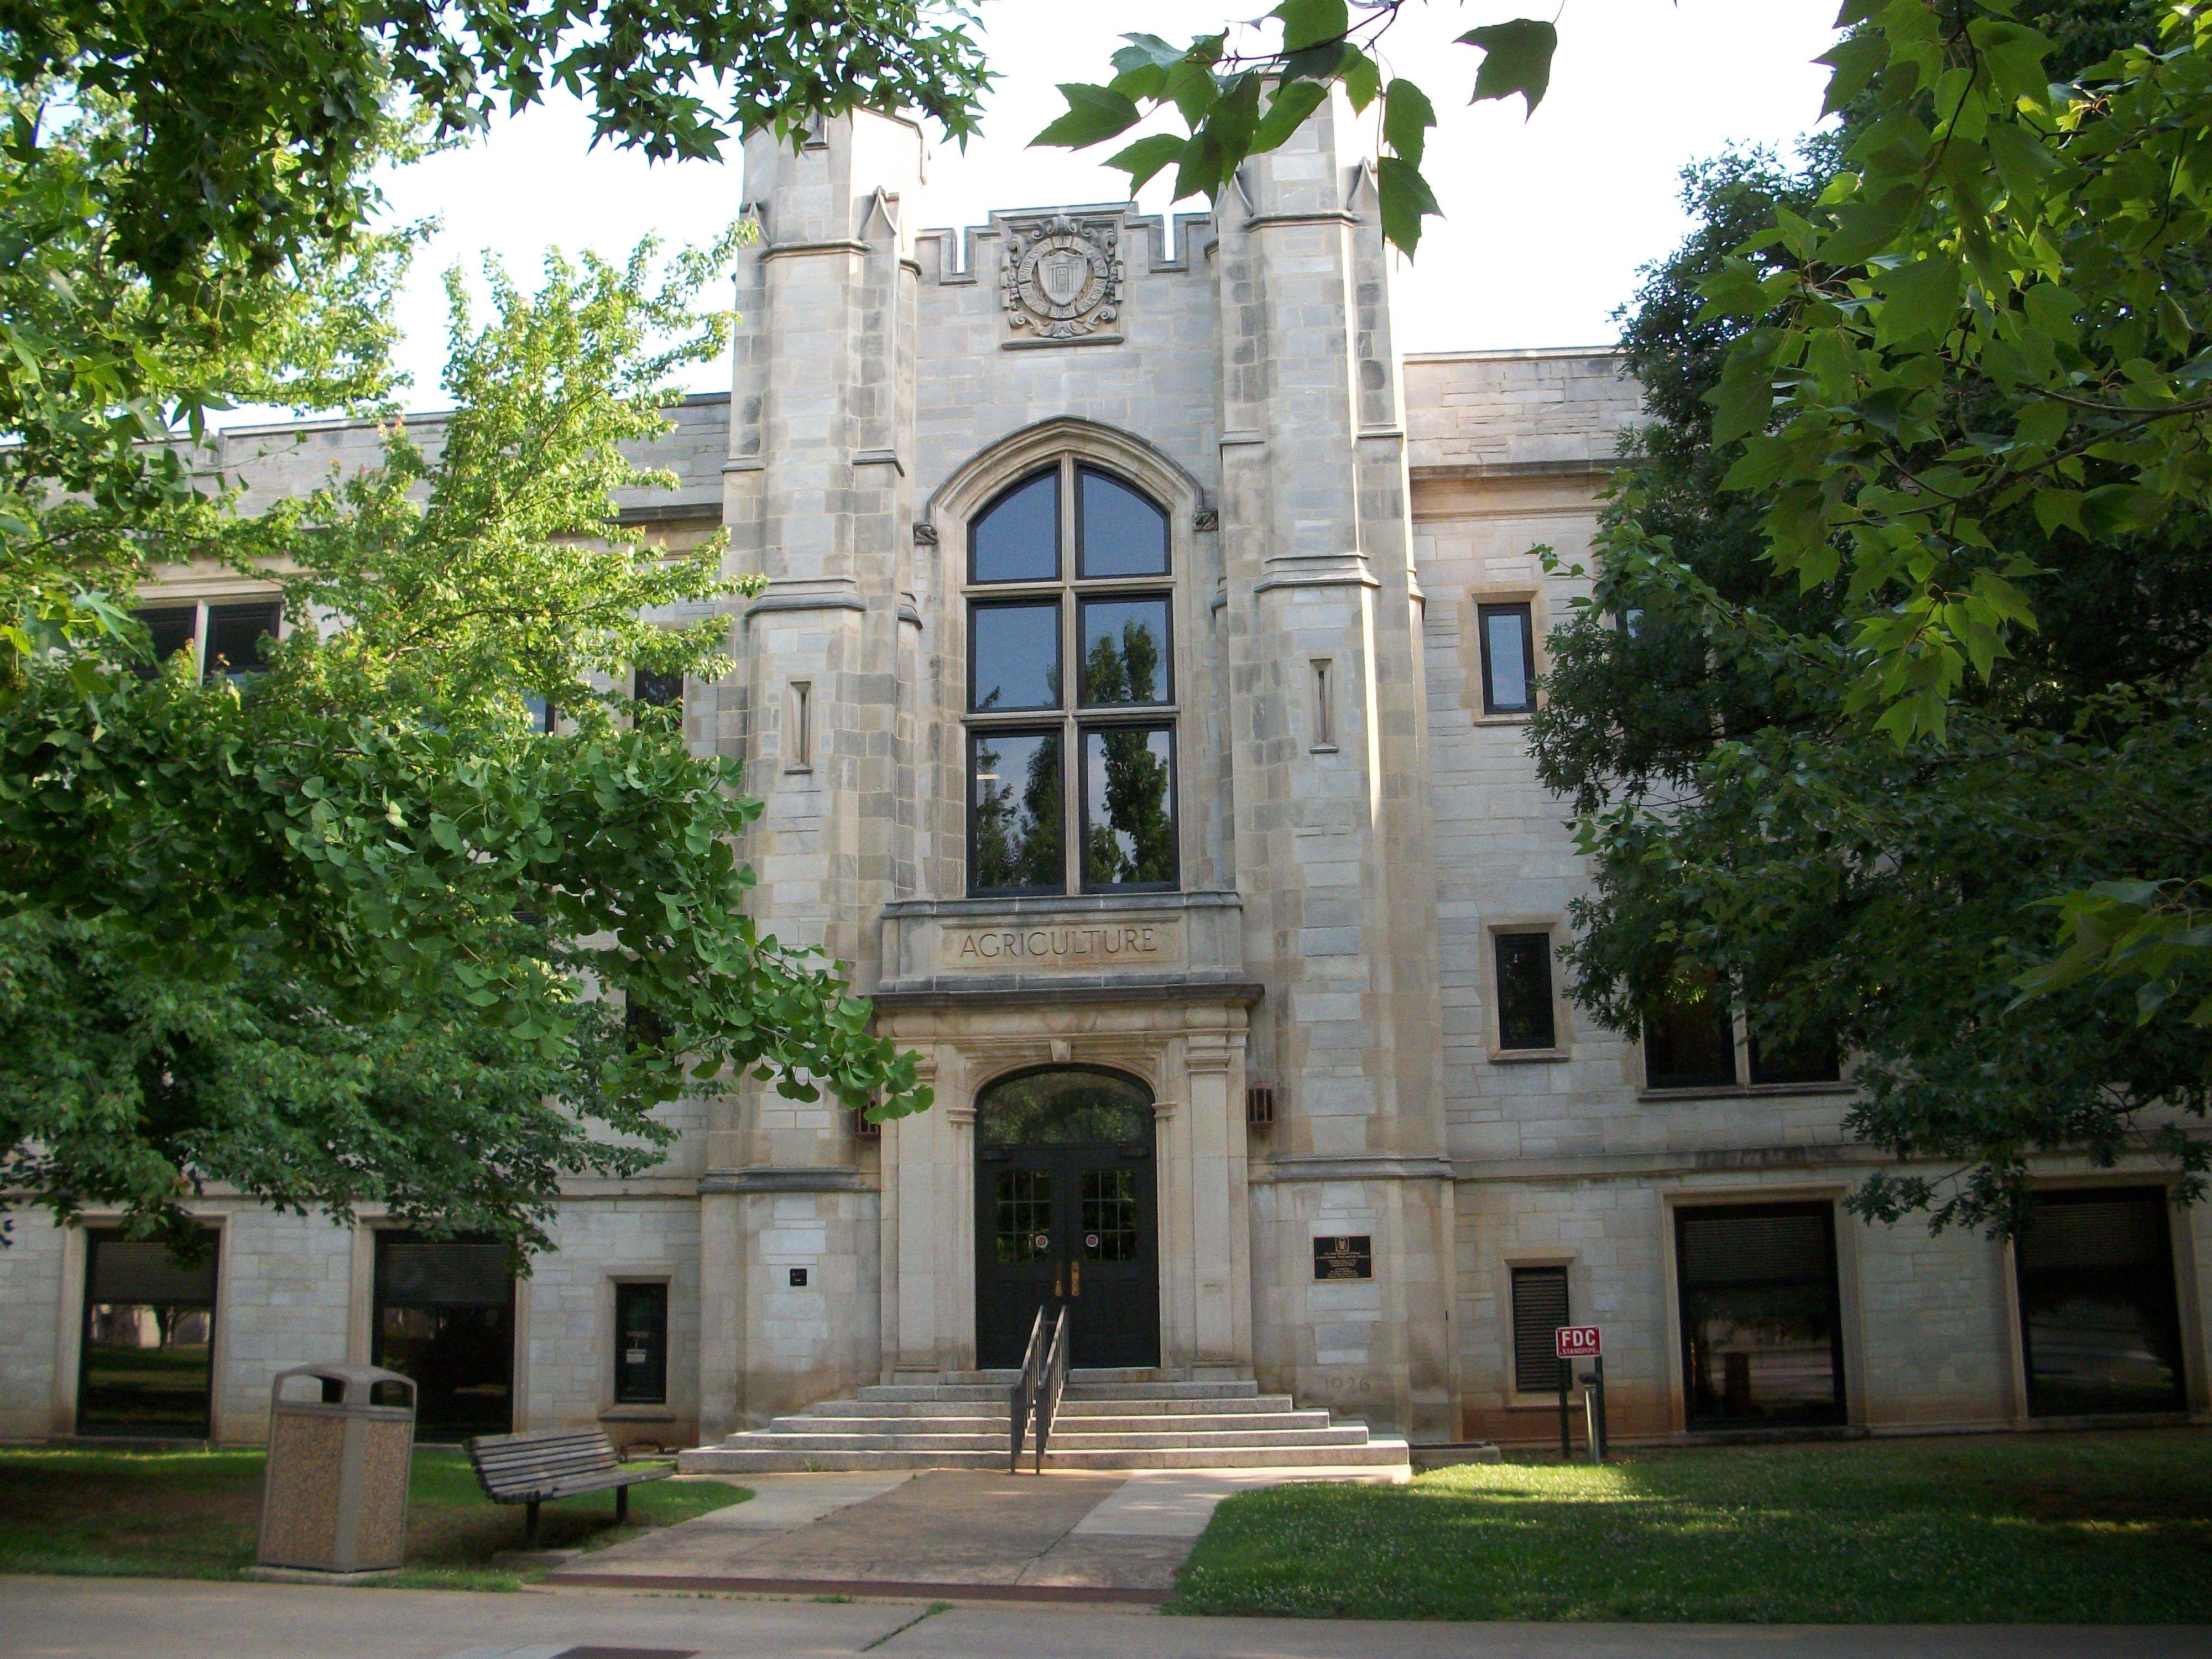 University of Arkansas Logo - University of Arkansas Agriculture Building